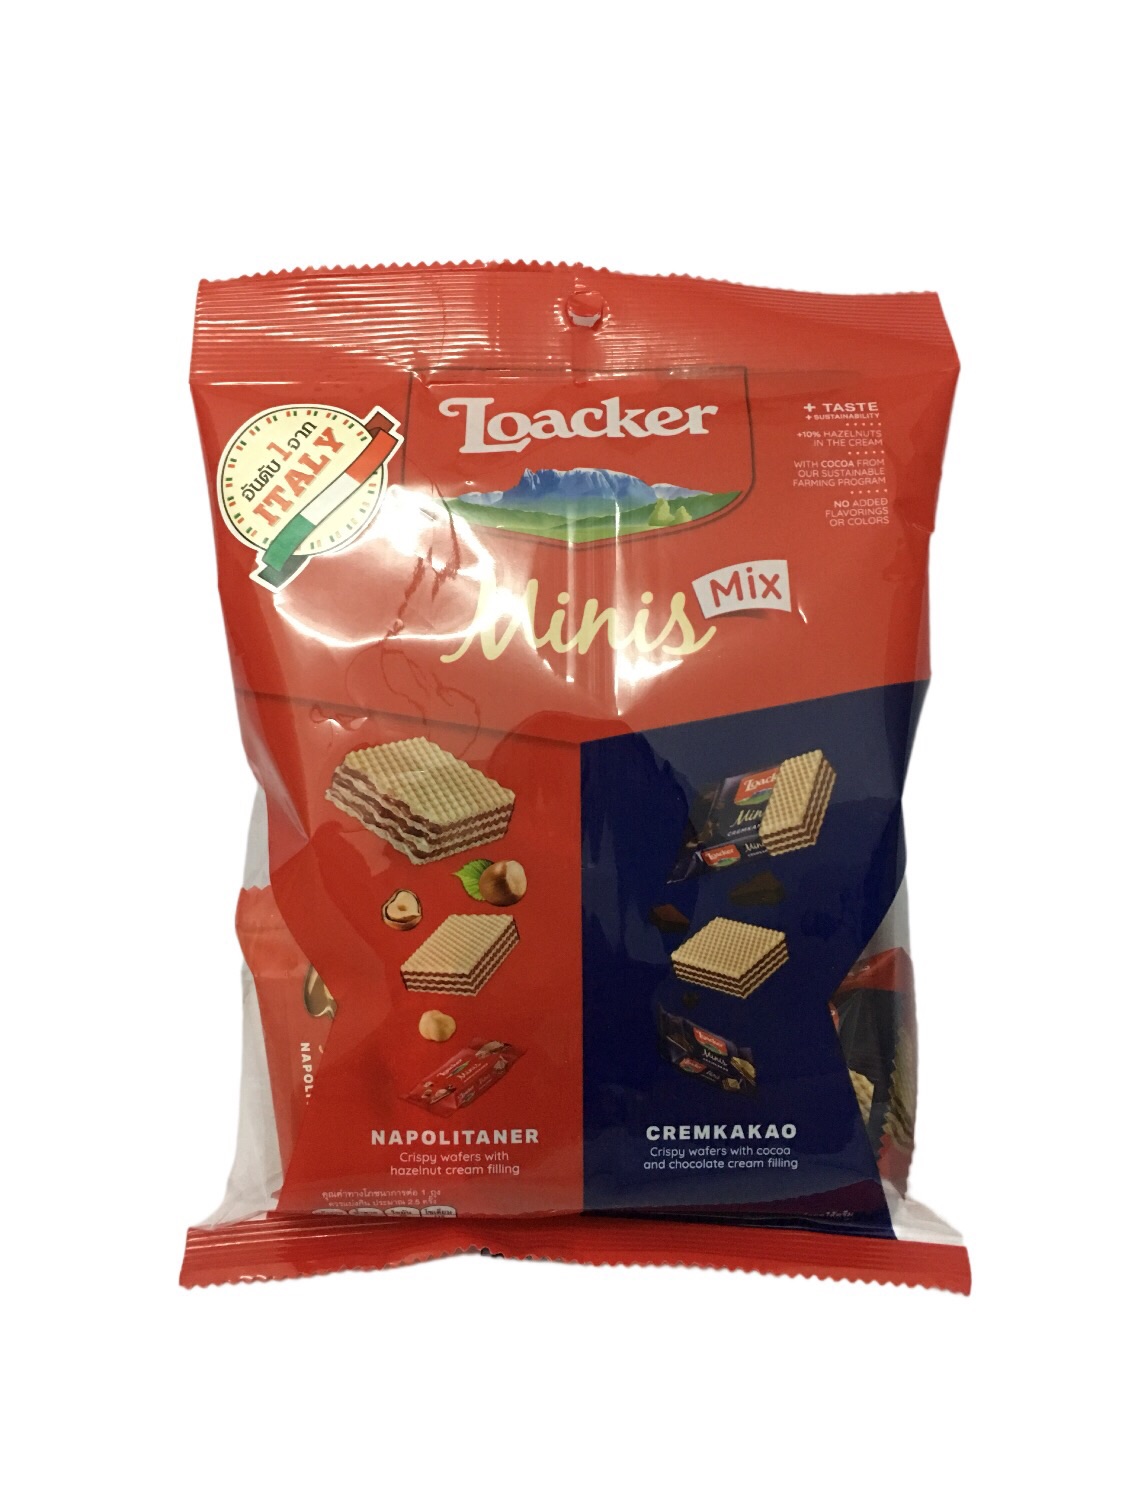 🇮🇹#1 LOACKER Minis Mix Wafer - Napolitaner & Cremkakao Flavors 80g🍫อันดับ 1 จากอิตาลี ล็อกเกอร์ มินิเวเฟอร์สอดไส้ครีมคละรส รสเฮเซลนัตและรสช็อกโกแลต🌰